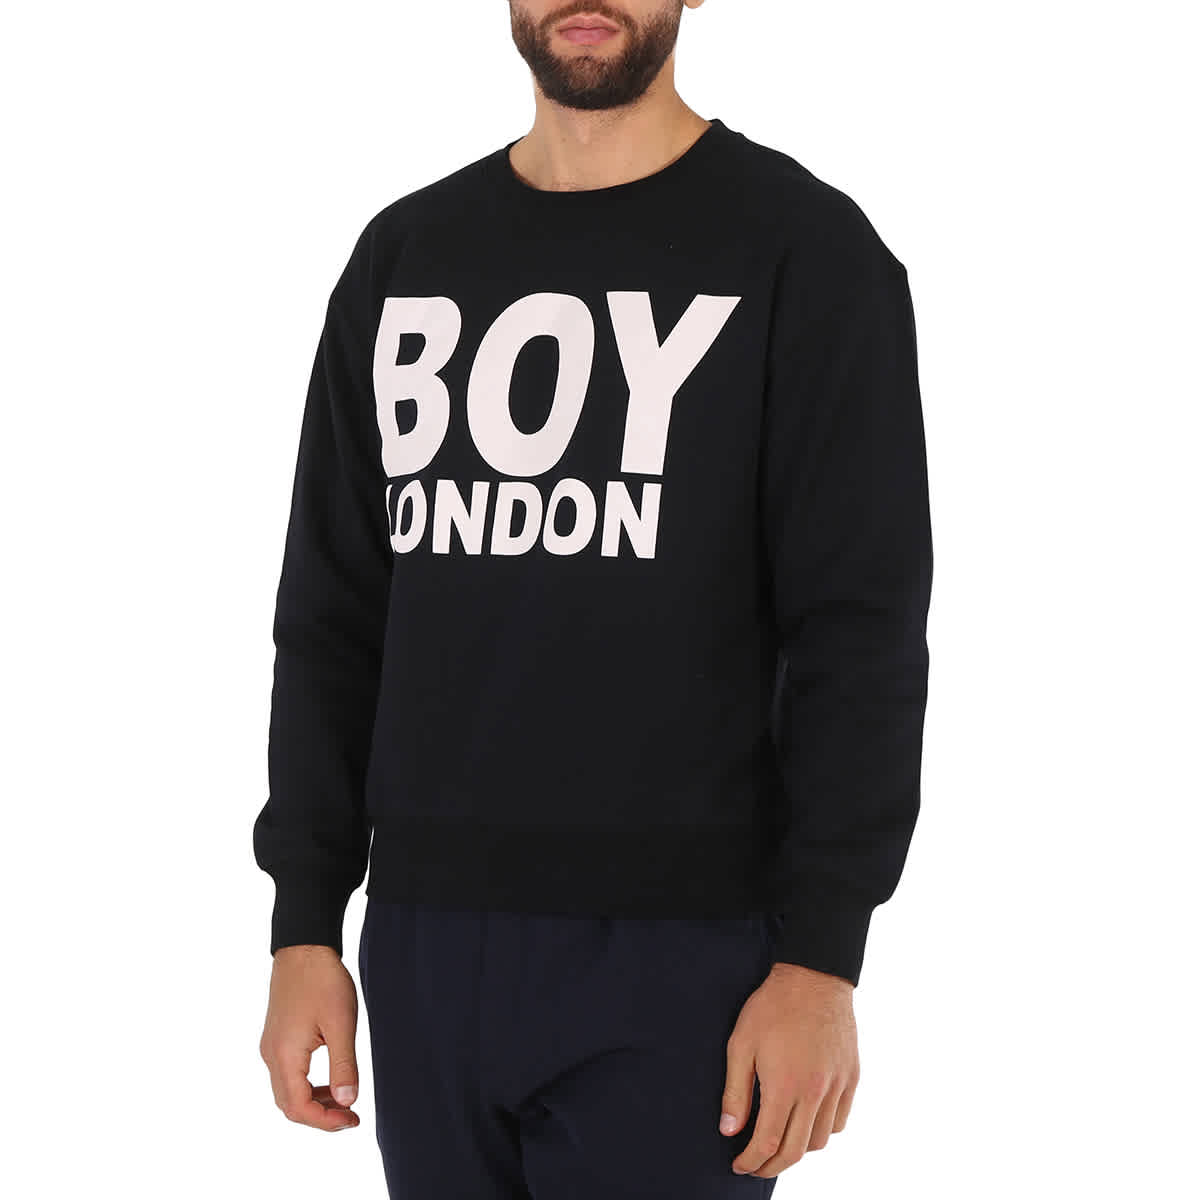 Boy London Black/White Reflective Cotton Sweatshirt | eBay